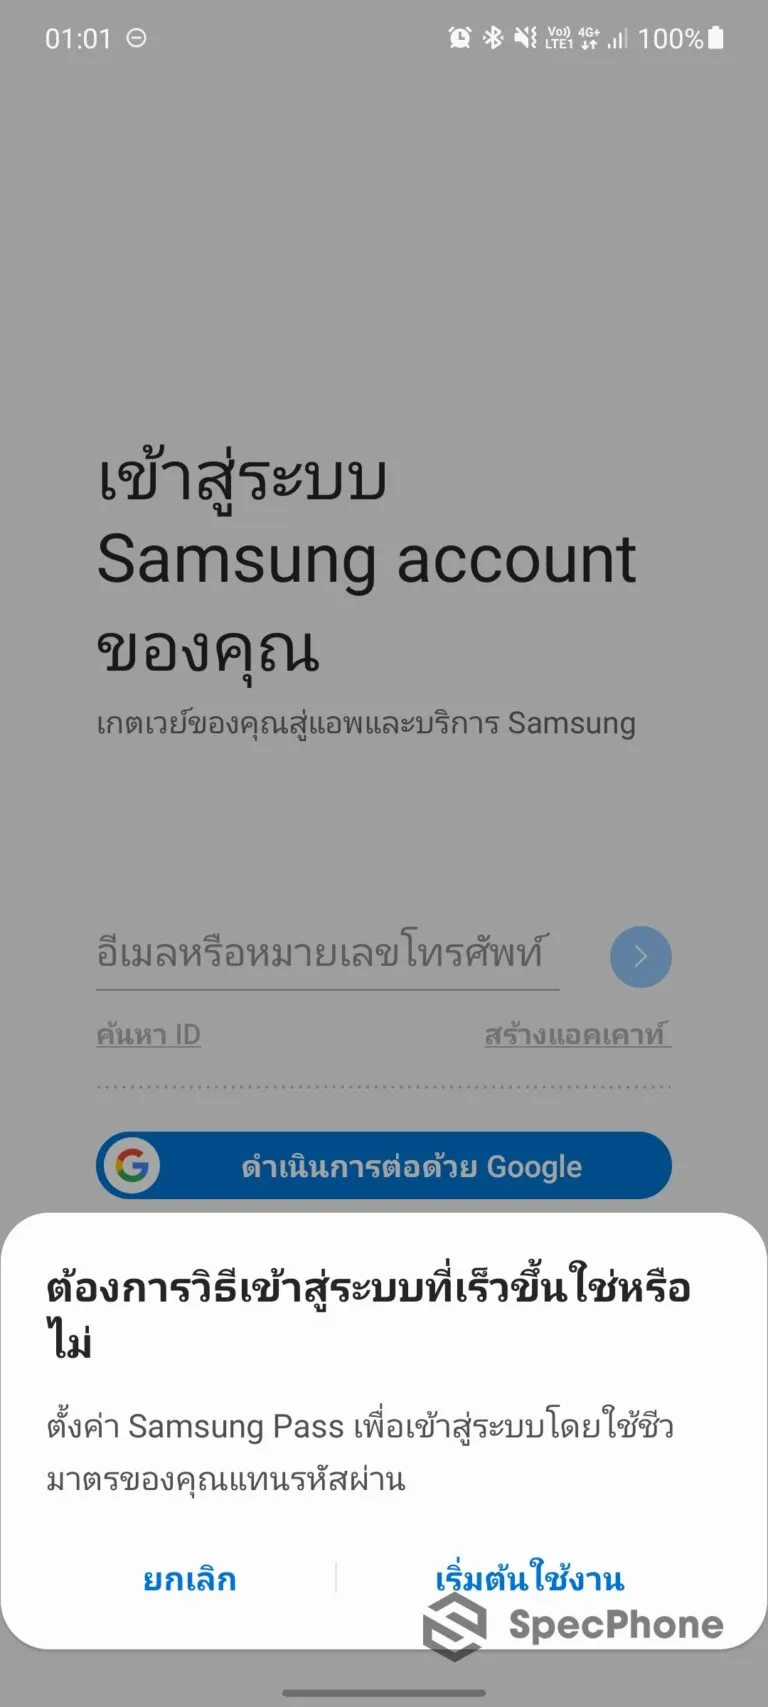 Samsung Account 05 3